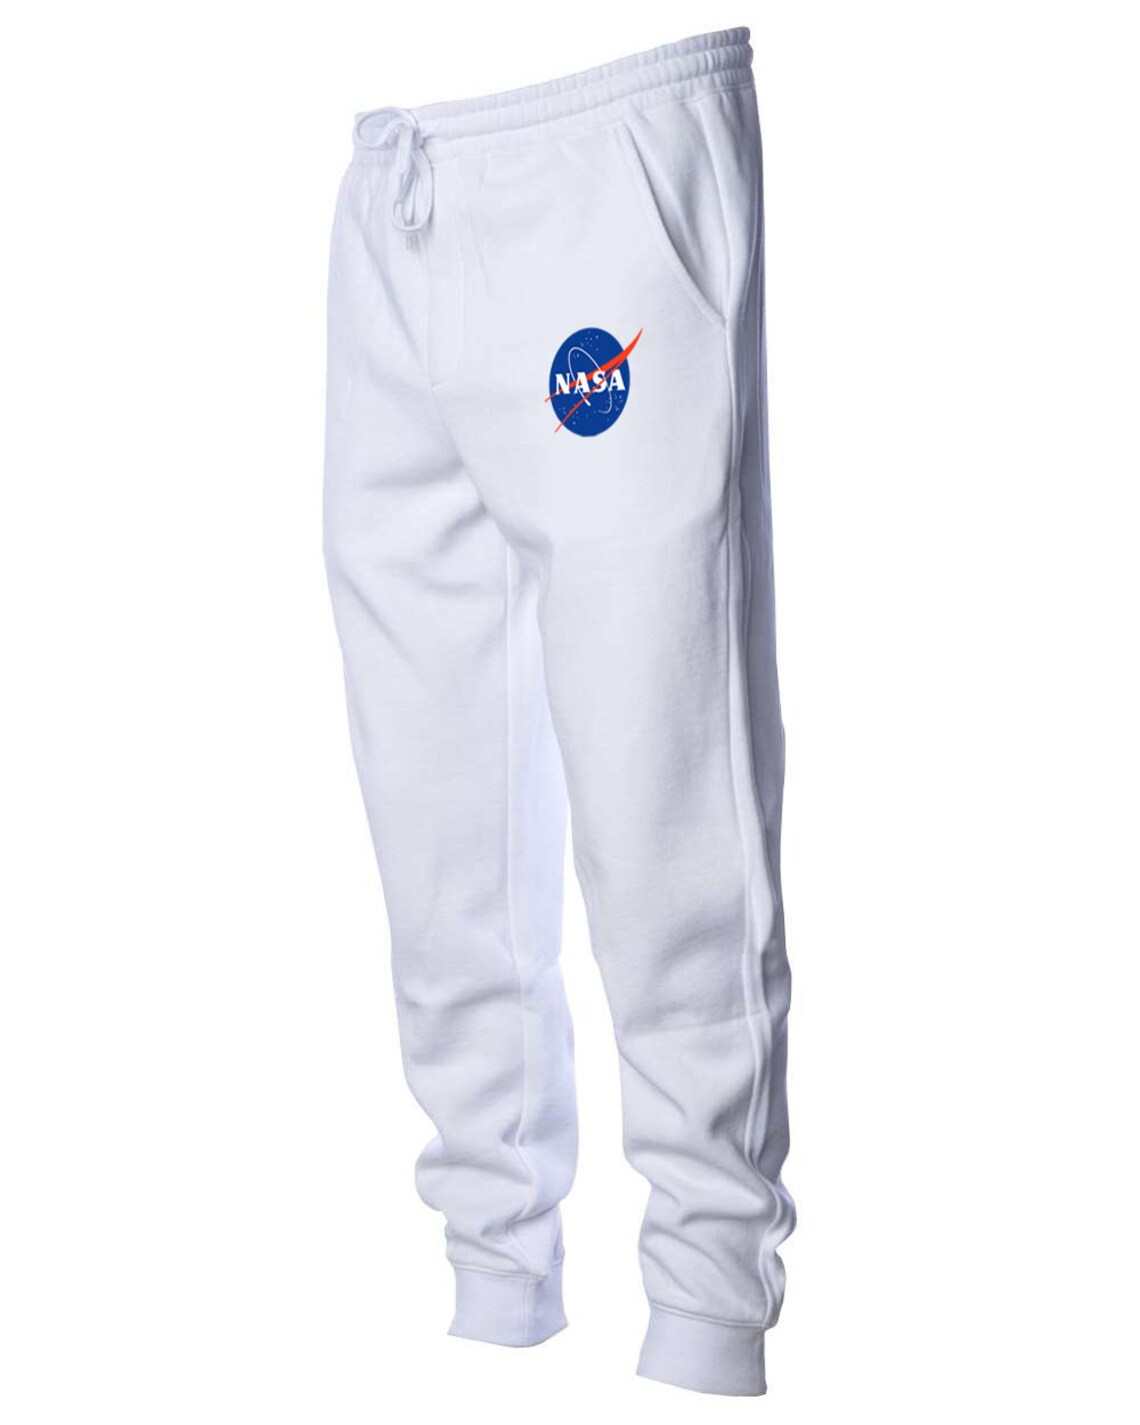 NASA Premium Joggers NASA Space Administration Sweatsuit - Etsy